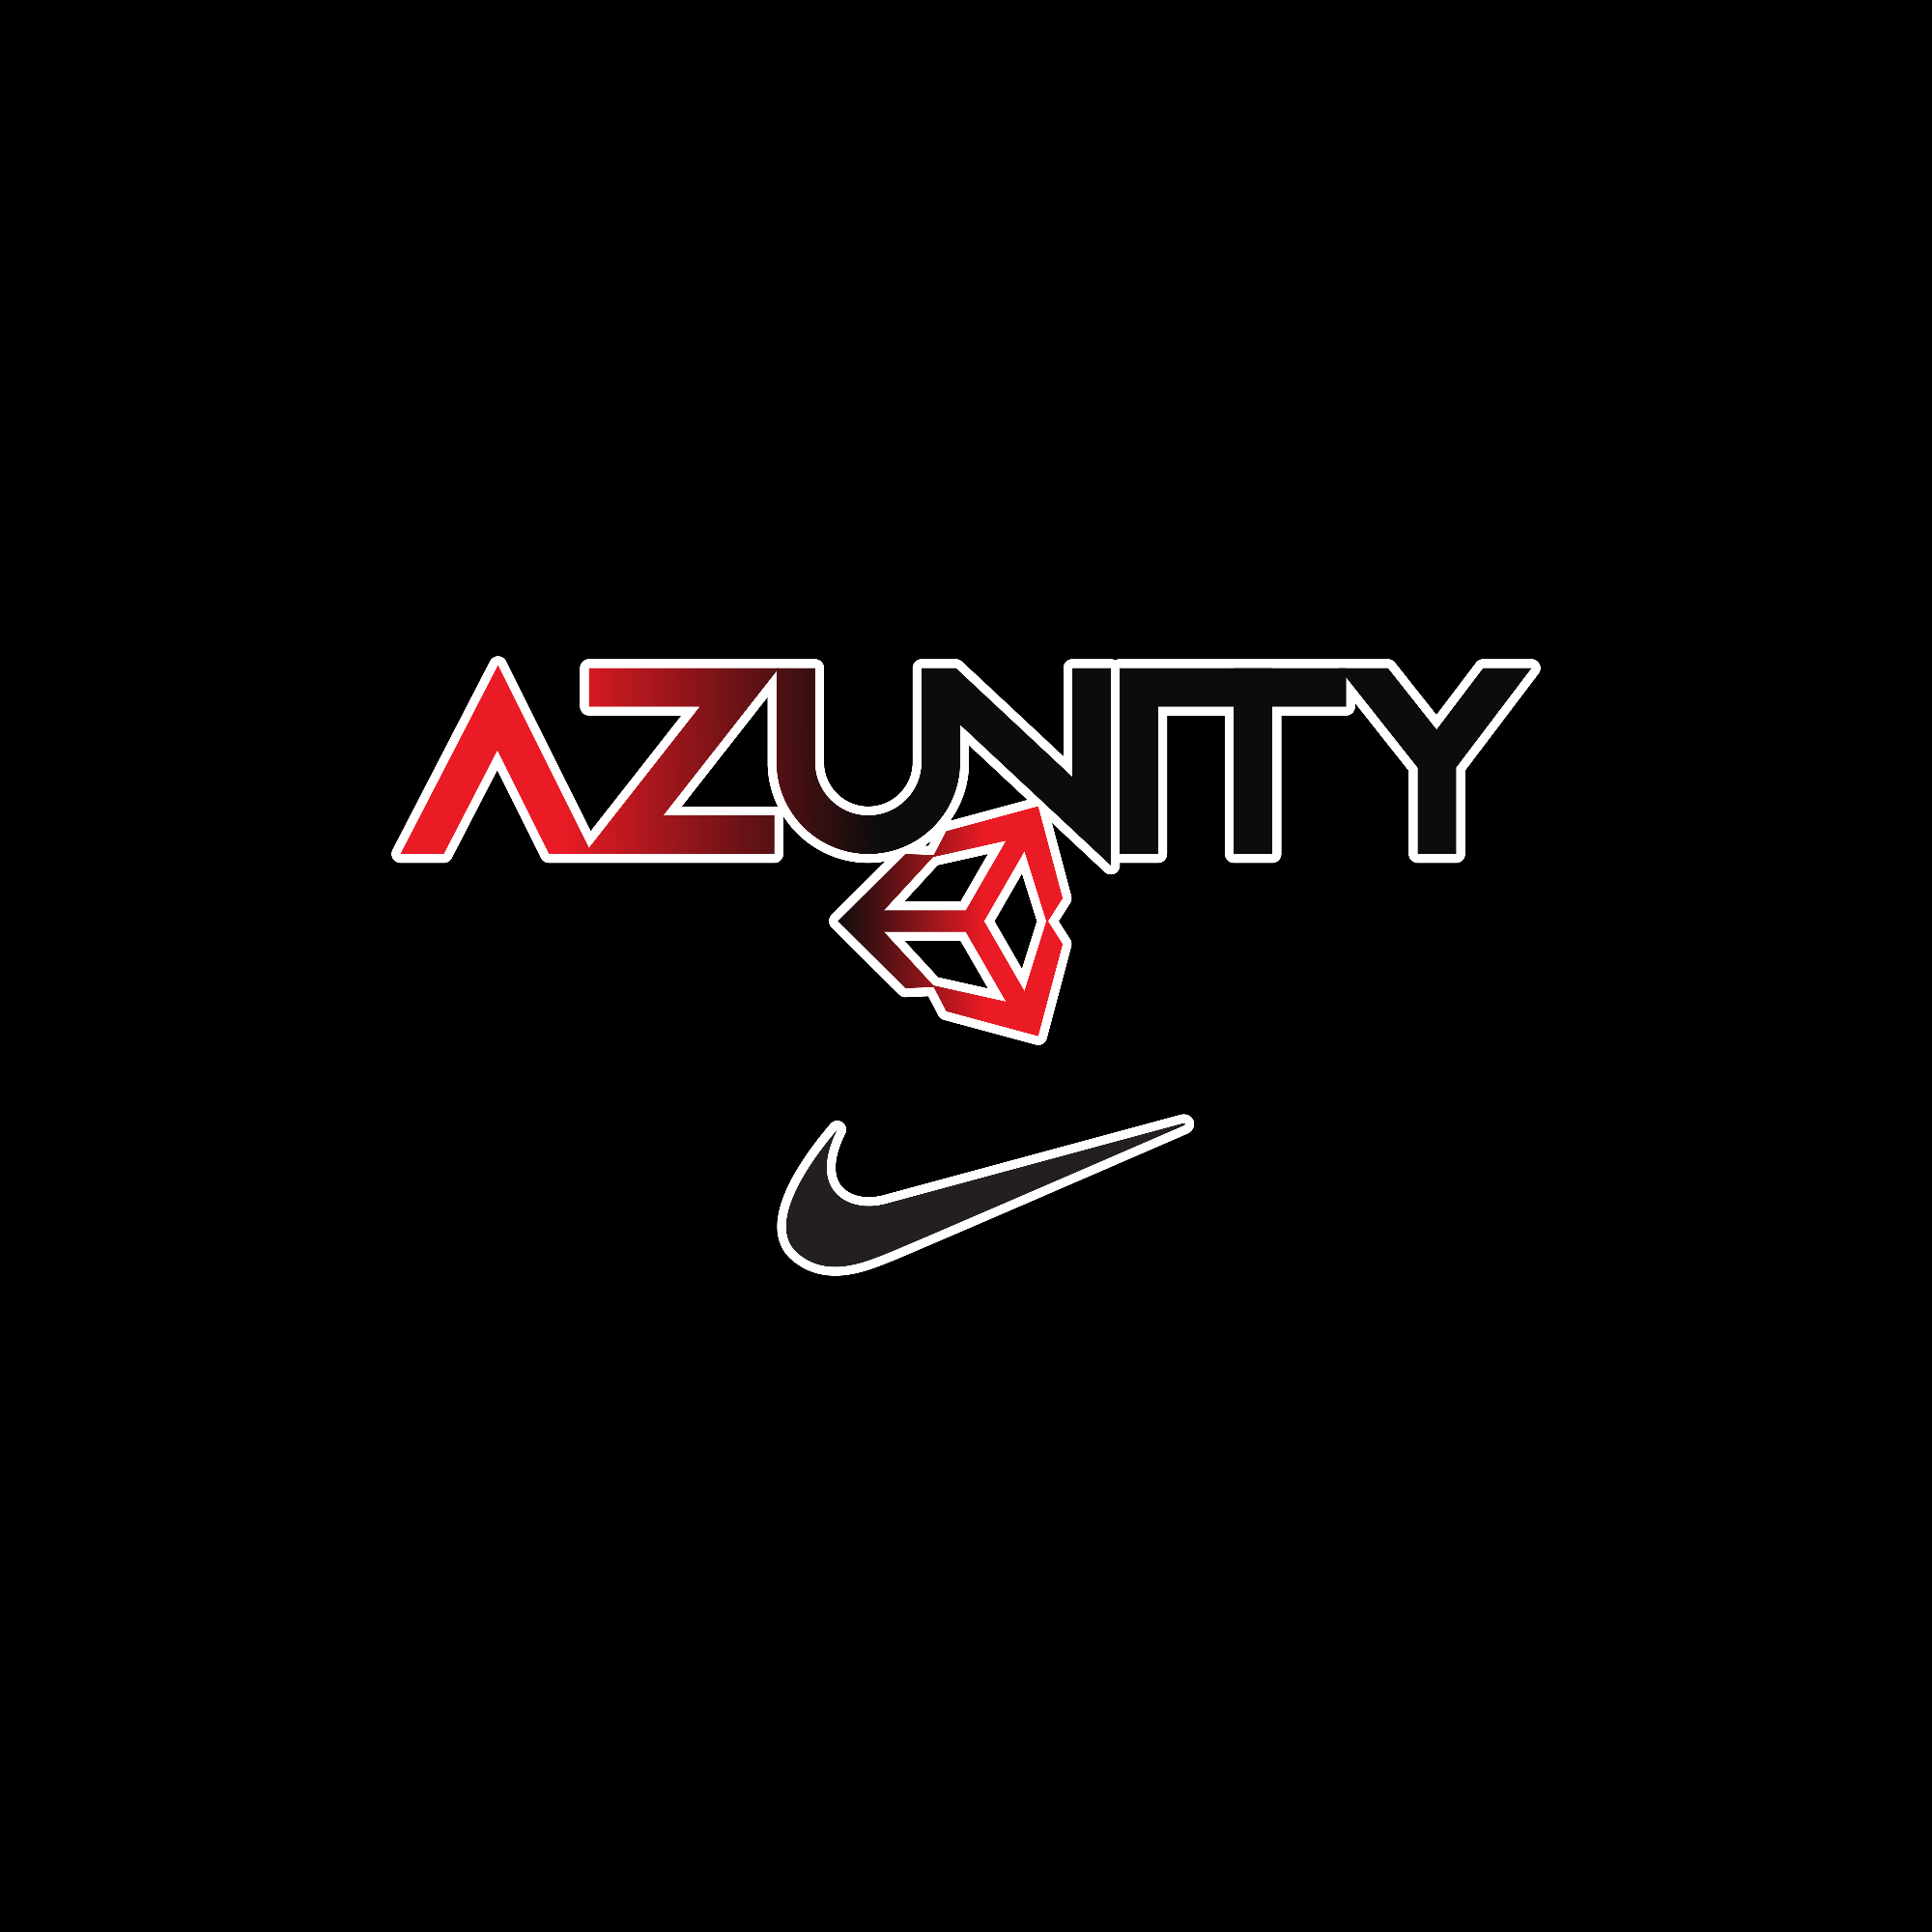 The official logo of Arizona Unity